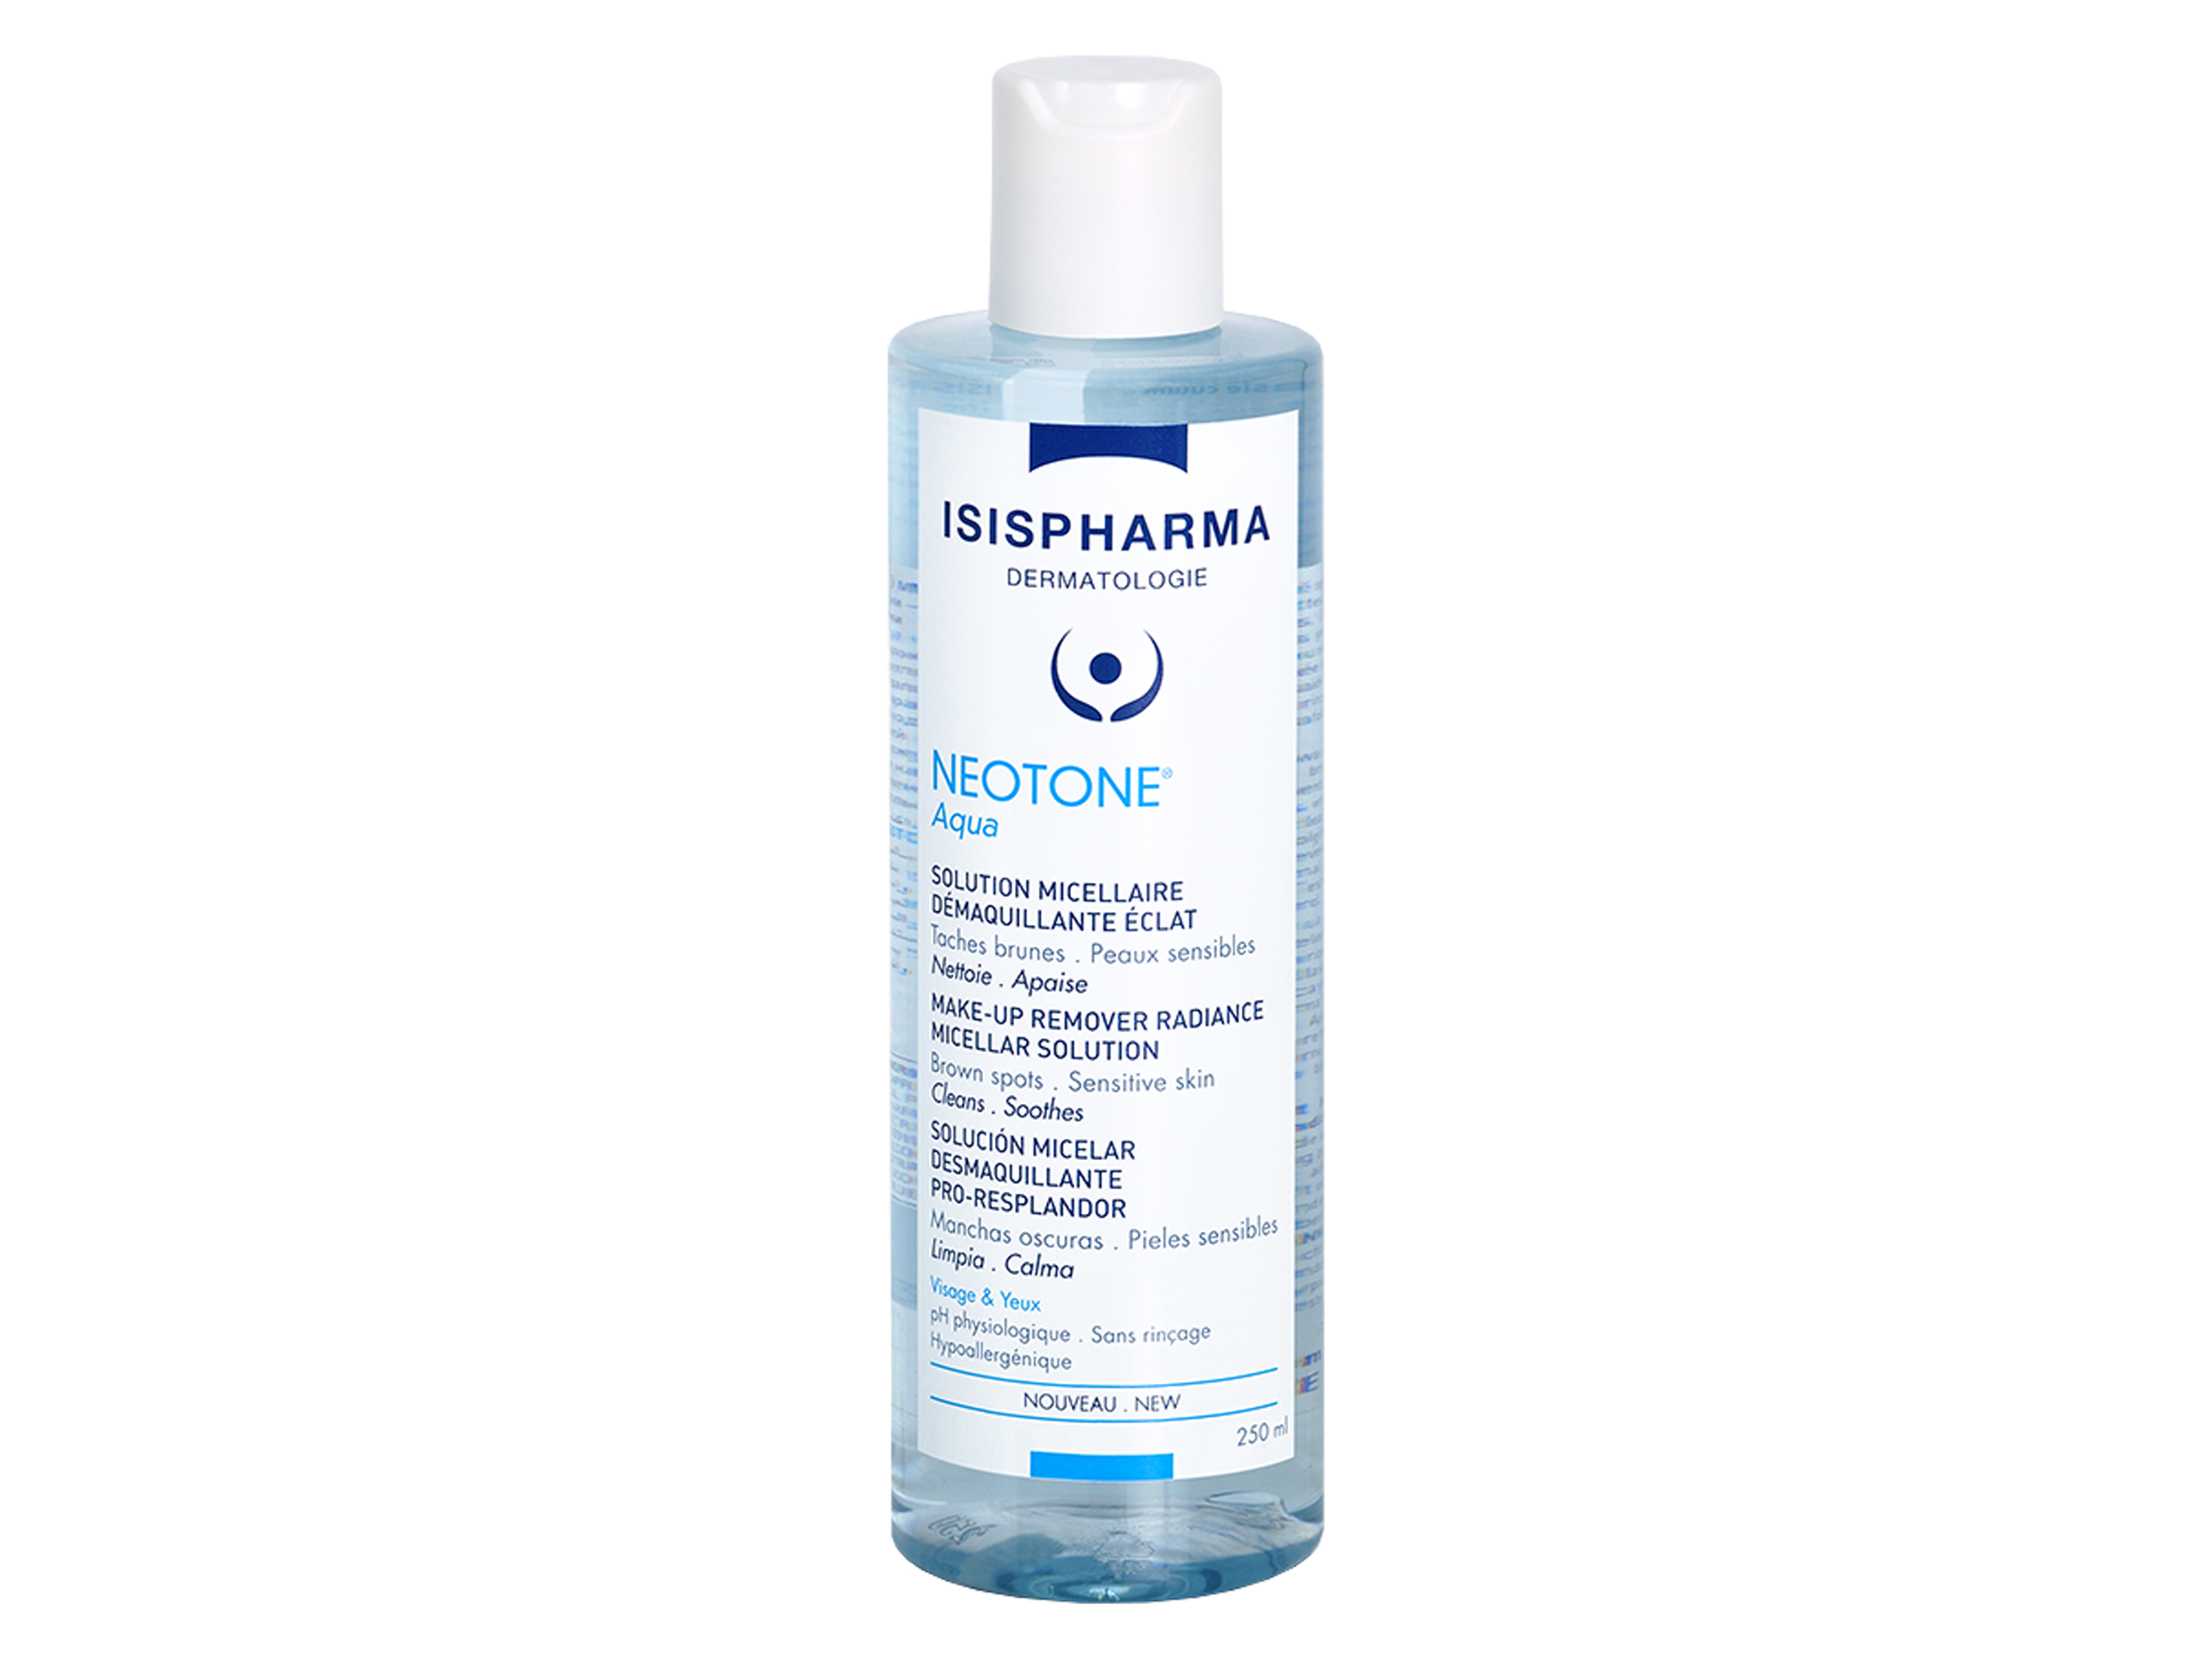 Isispharma Neotone Aqua Micellar Solution, 150 ml